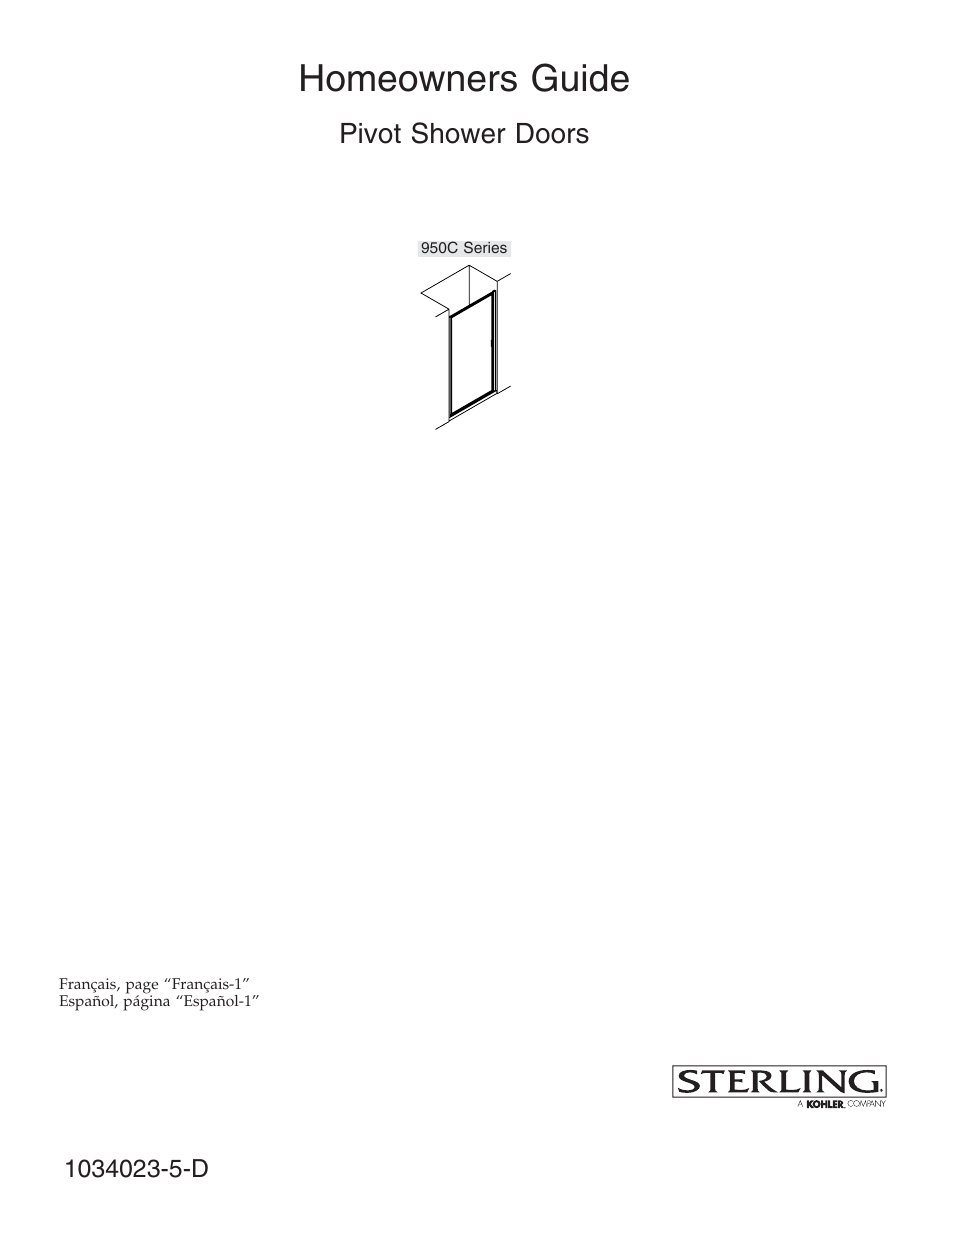 Sterling Plumbing Pivot Shower Doors 950C Series User Manual | 12 pages